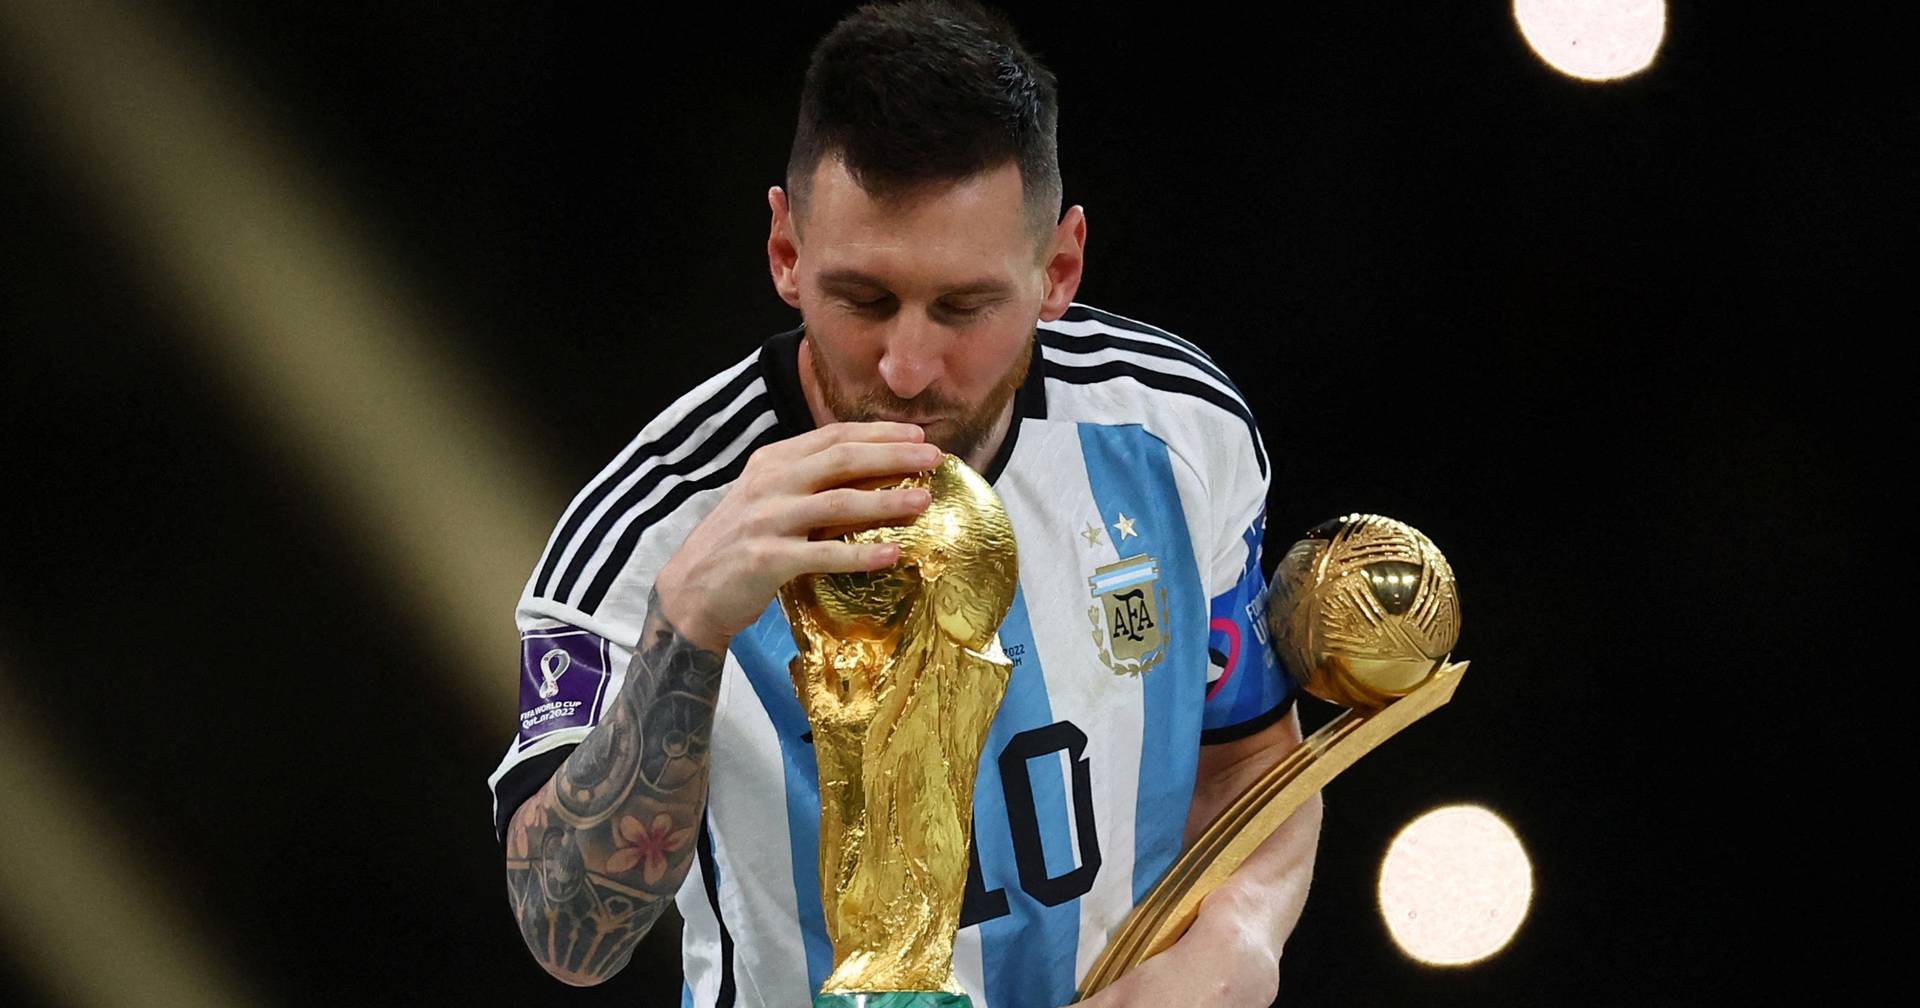 Mundial 2022: Messi “debe disculparse” por insultar a periodistas